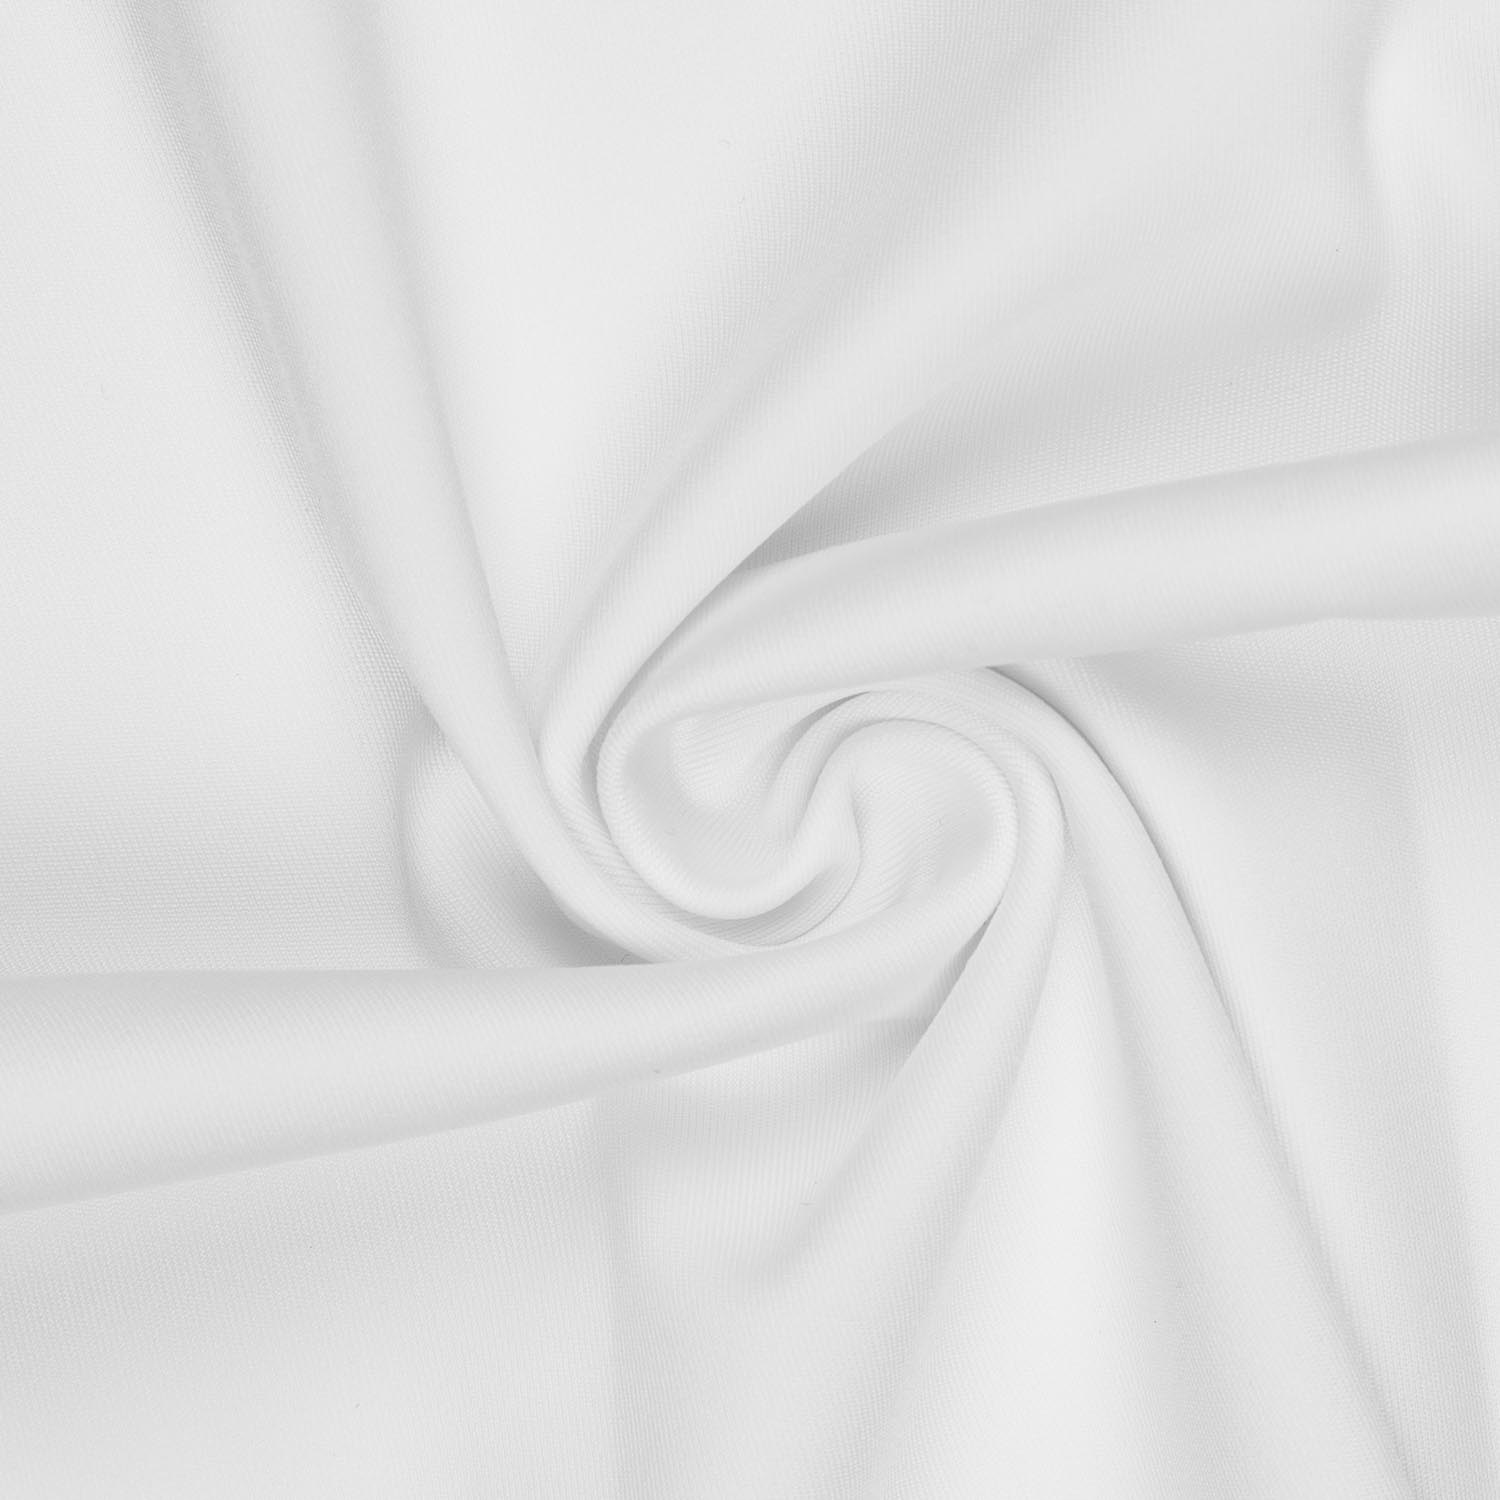 88%Polyester 12%Spandex 4 Way Stretch Woven Nylon Spandex Ripstop